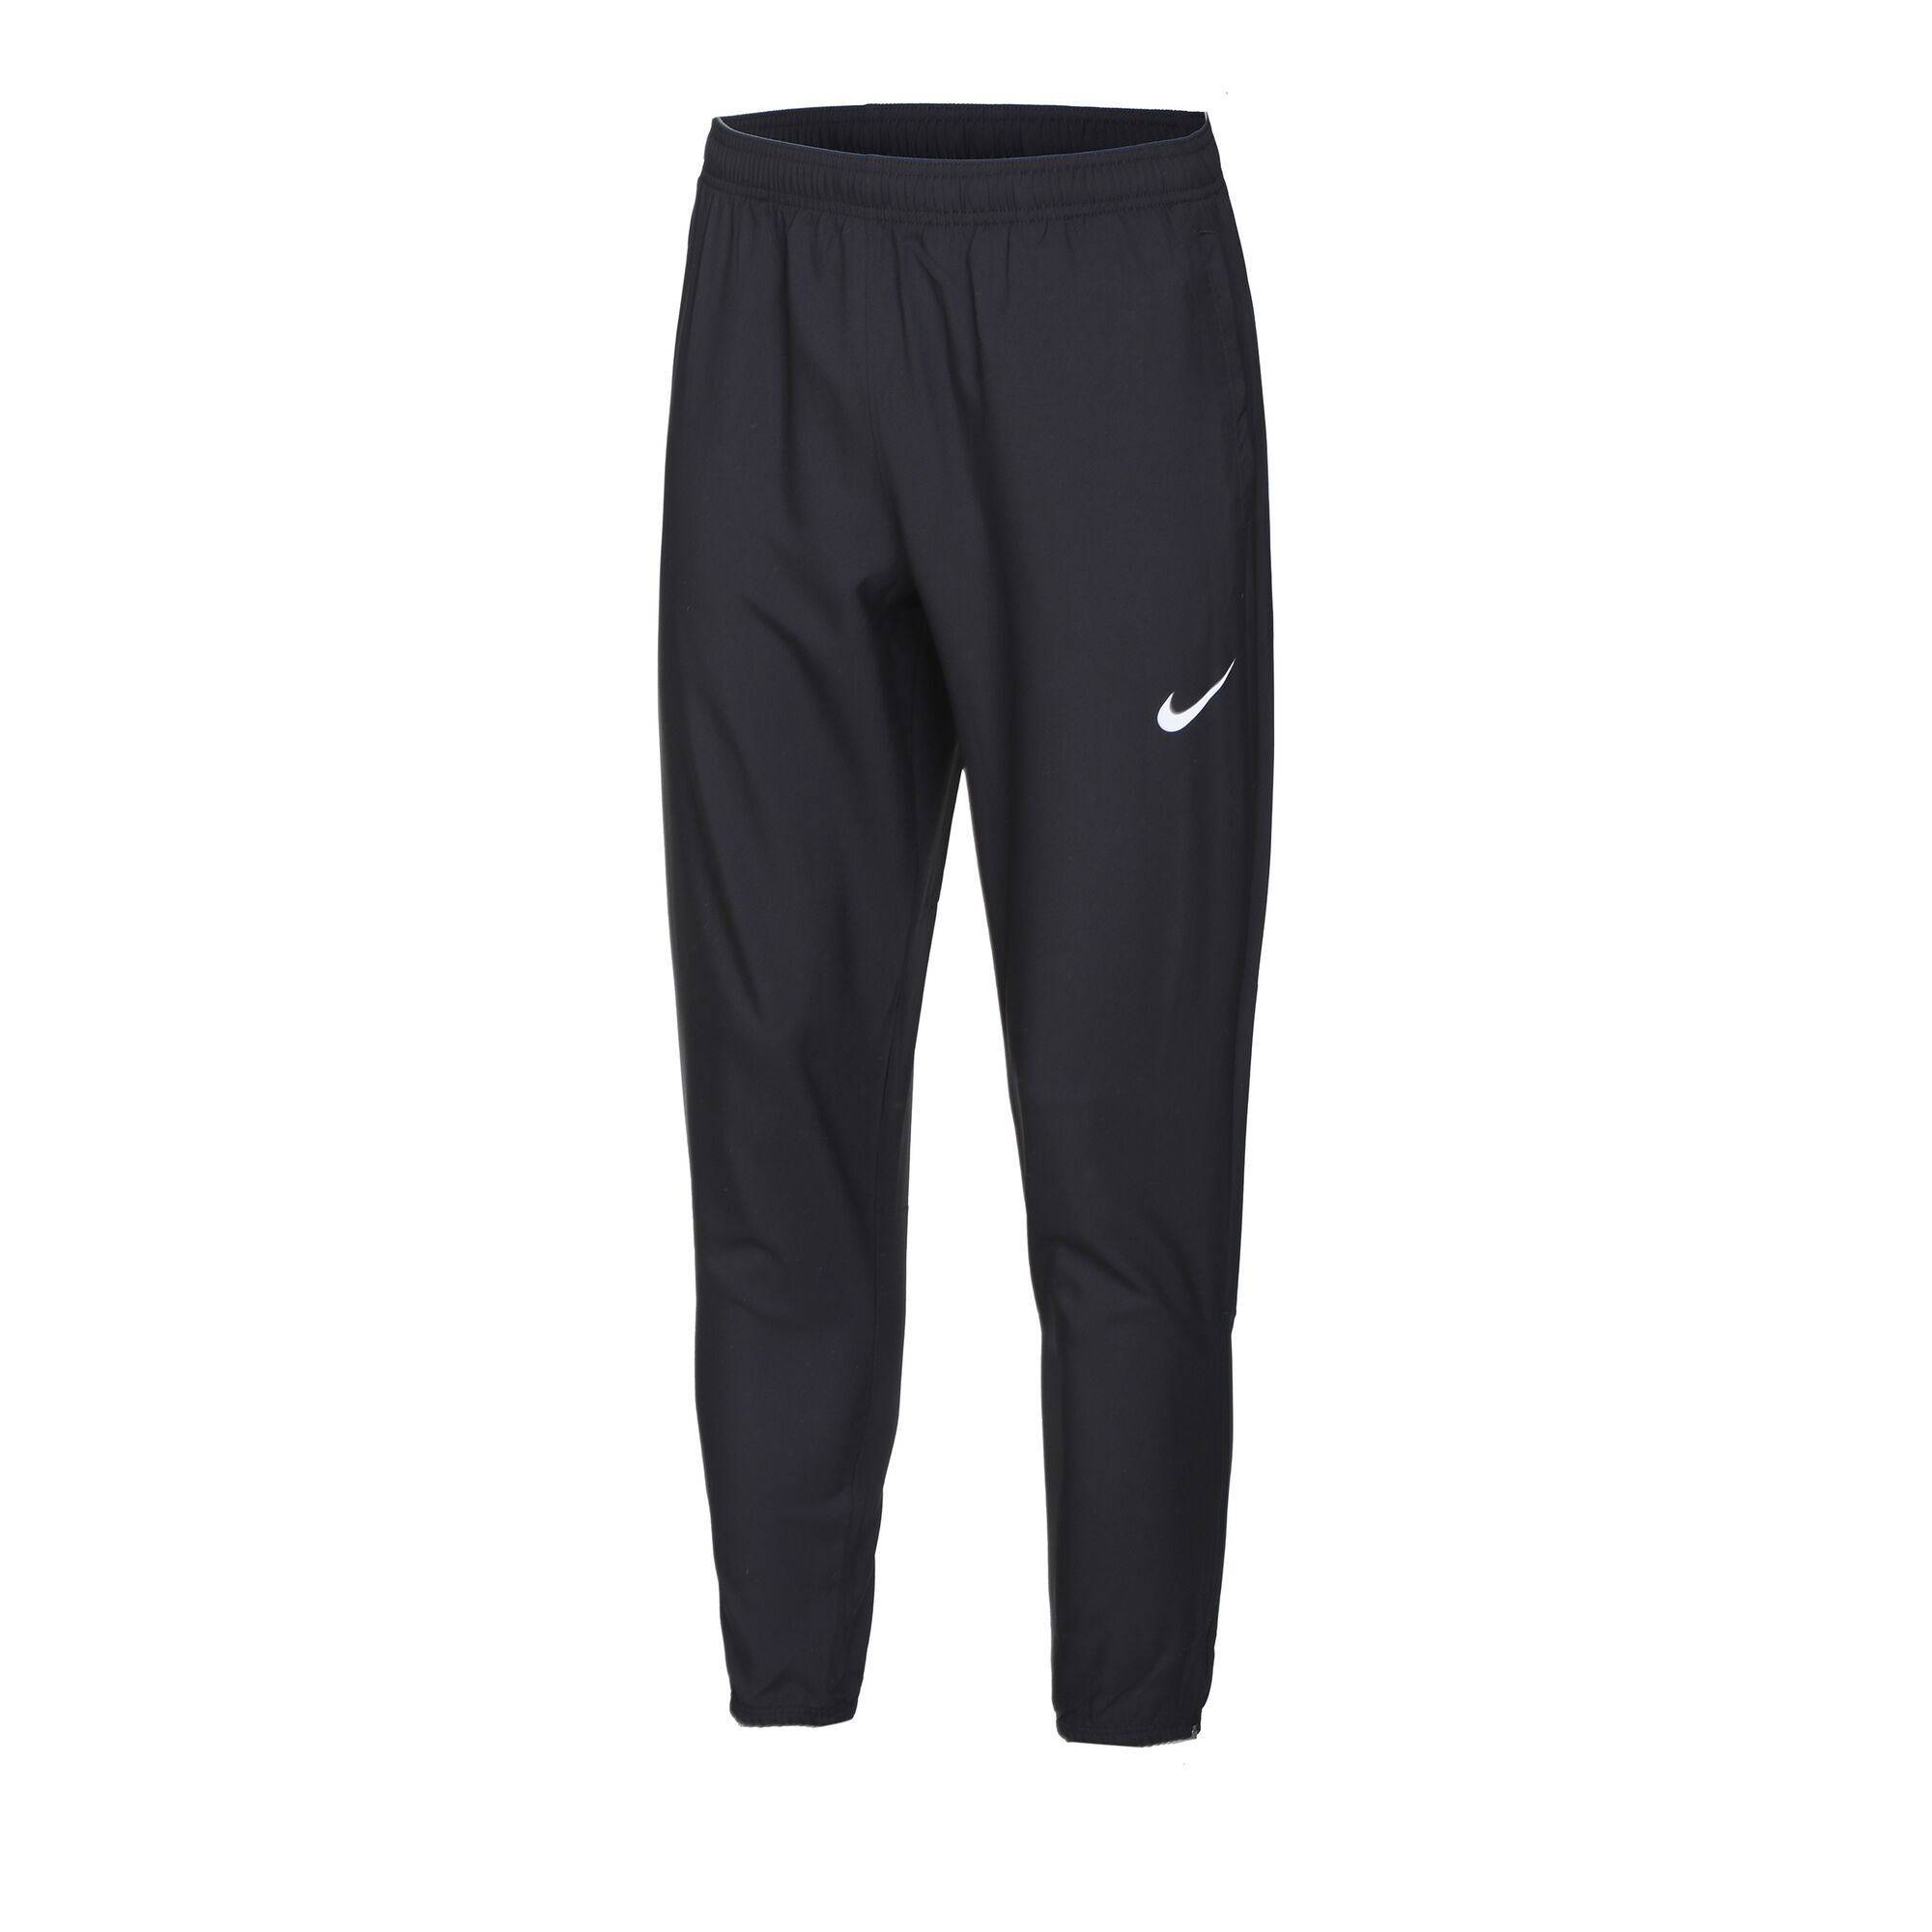 Buy Nike Dri-Fit Challenger Woven Running Pants Men Black online